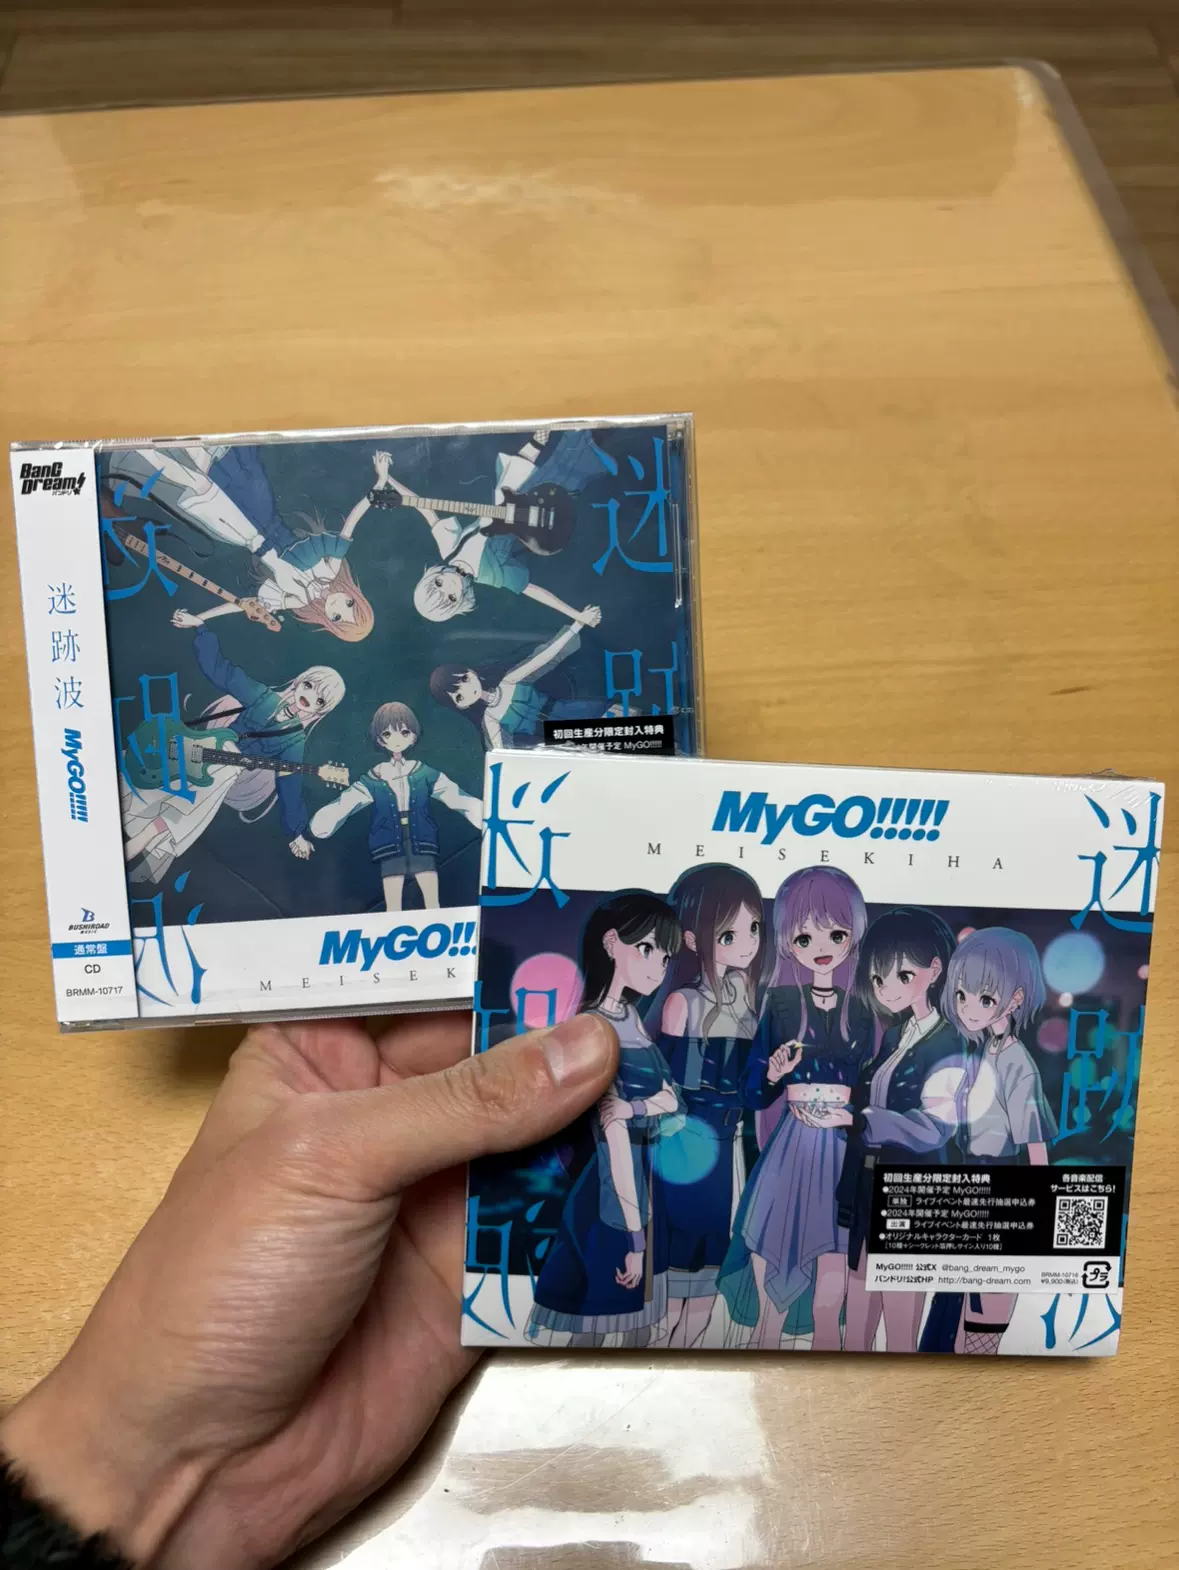 现货CD BanG Dream! It's MyGO 1st专辑迷跡波插入歌通常盘限量-Taobao